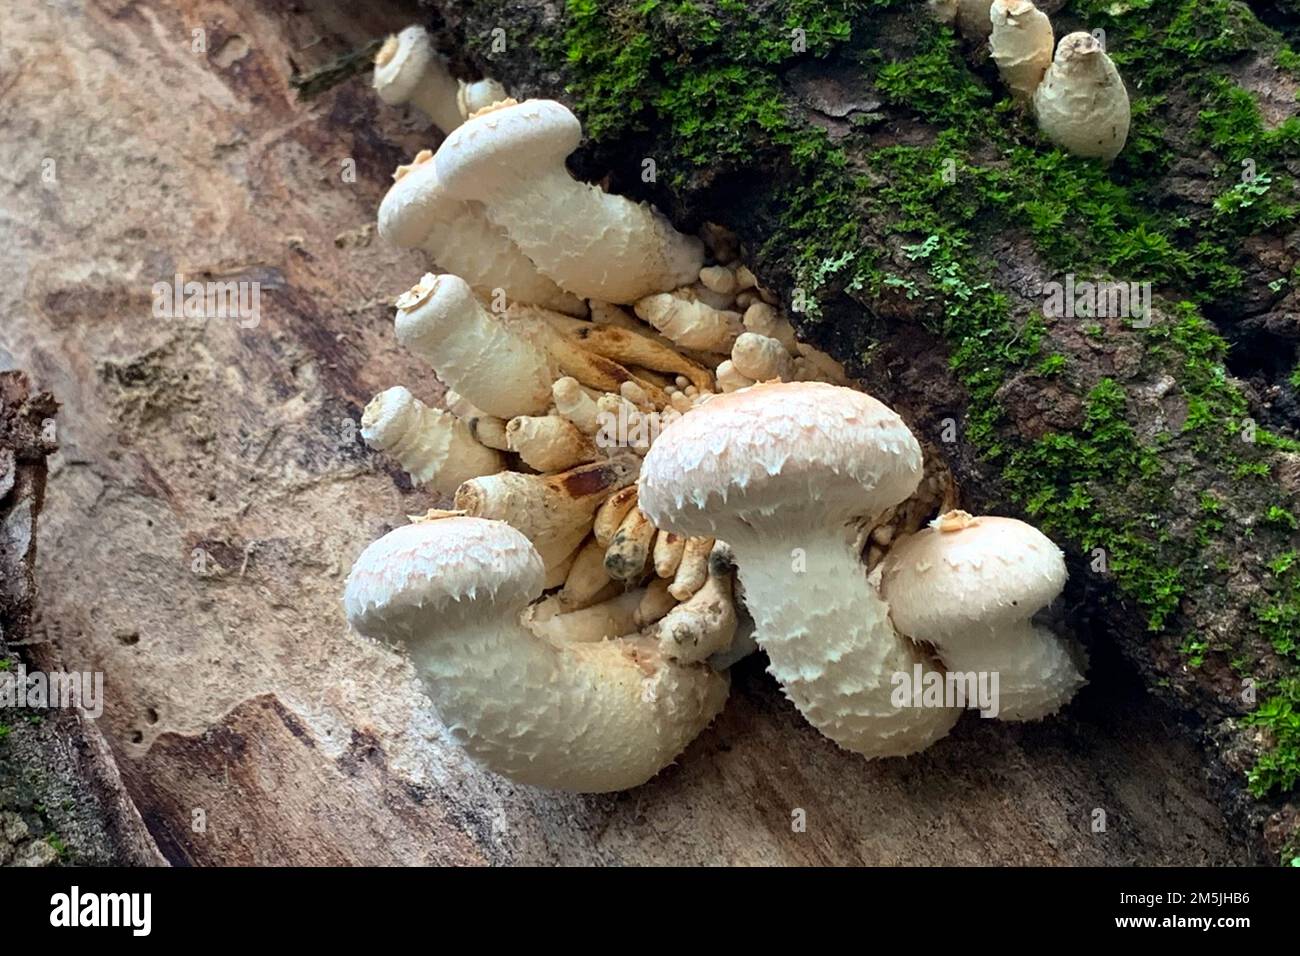 Pholiota mushroom Stock Photo